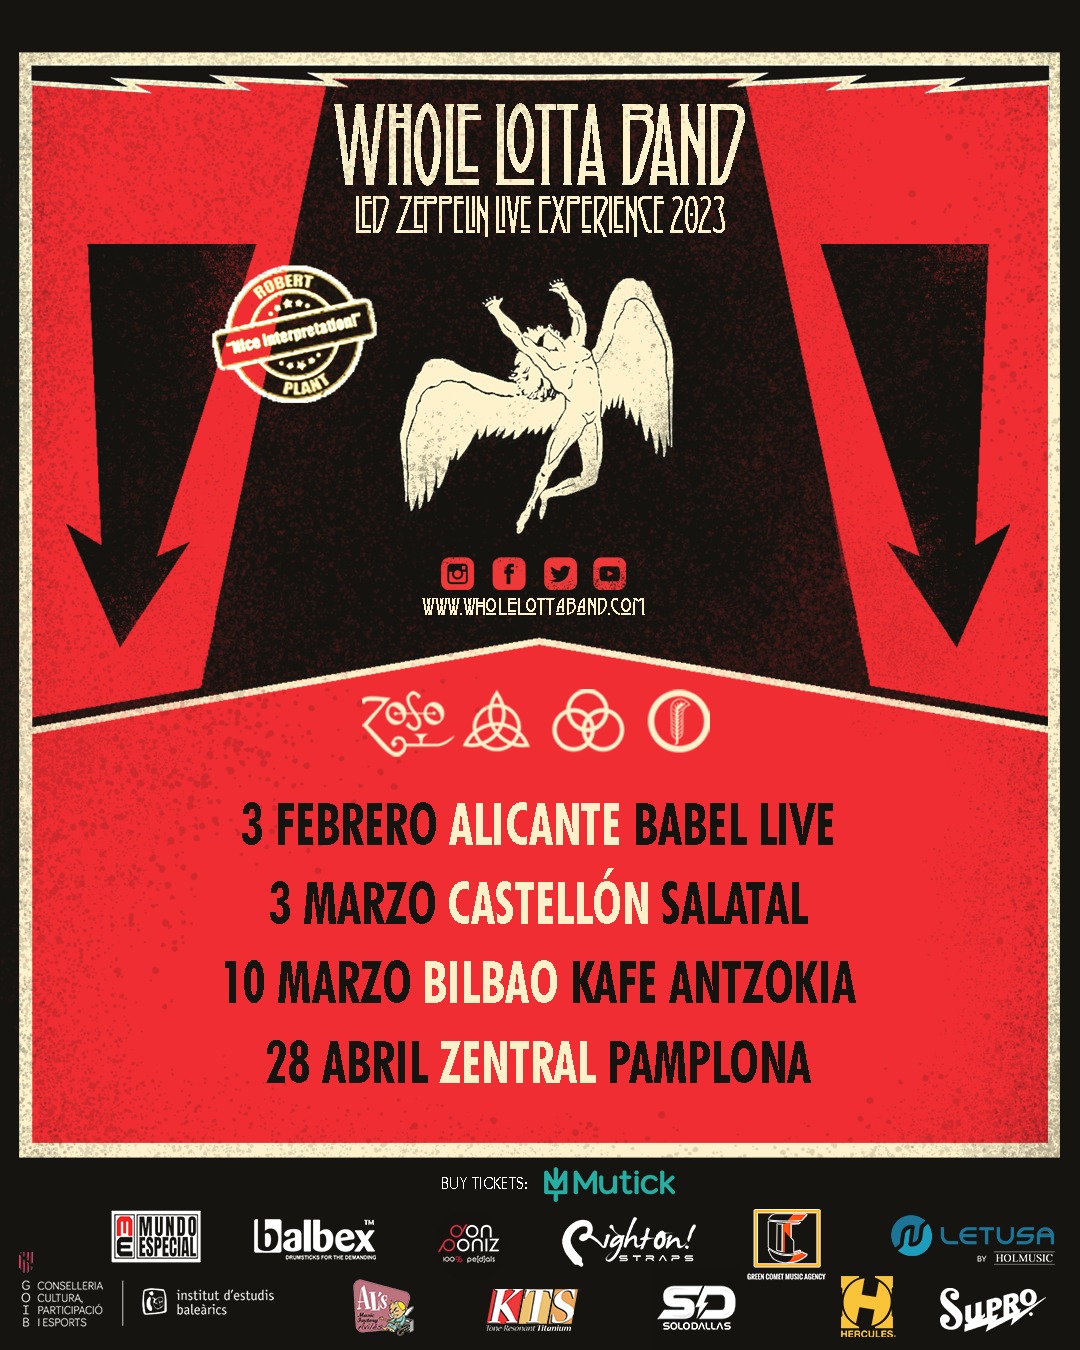 Whole Lotta Band - Led Zeppelin Live Experience en Alicante - Mutick